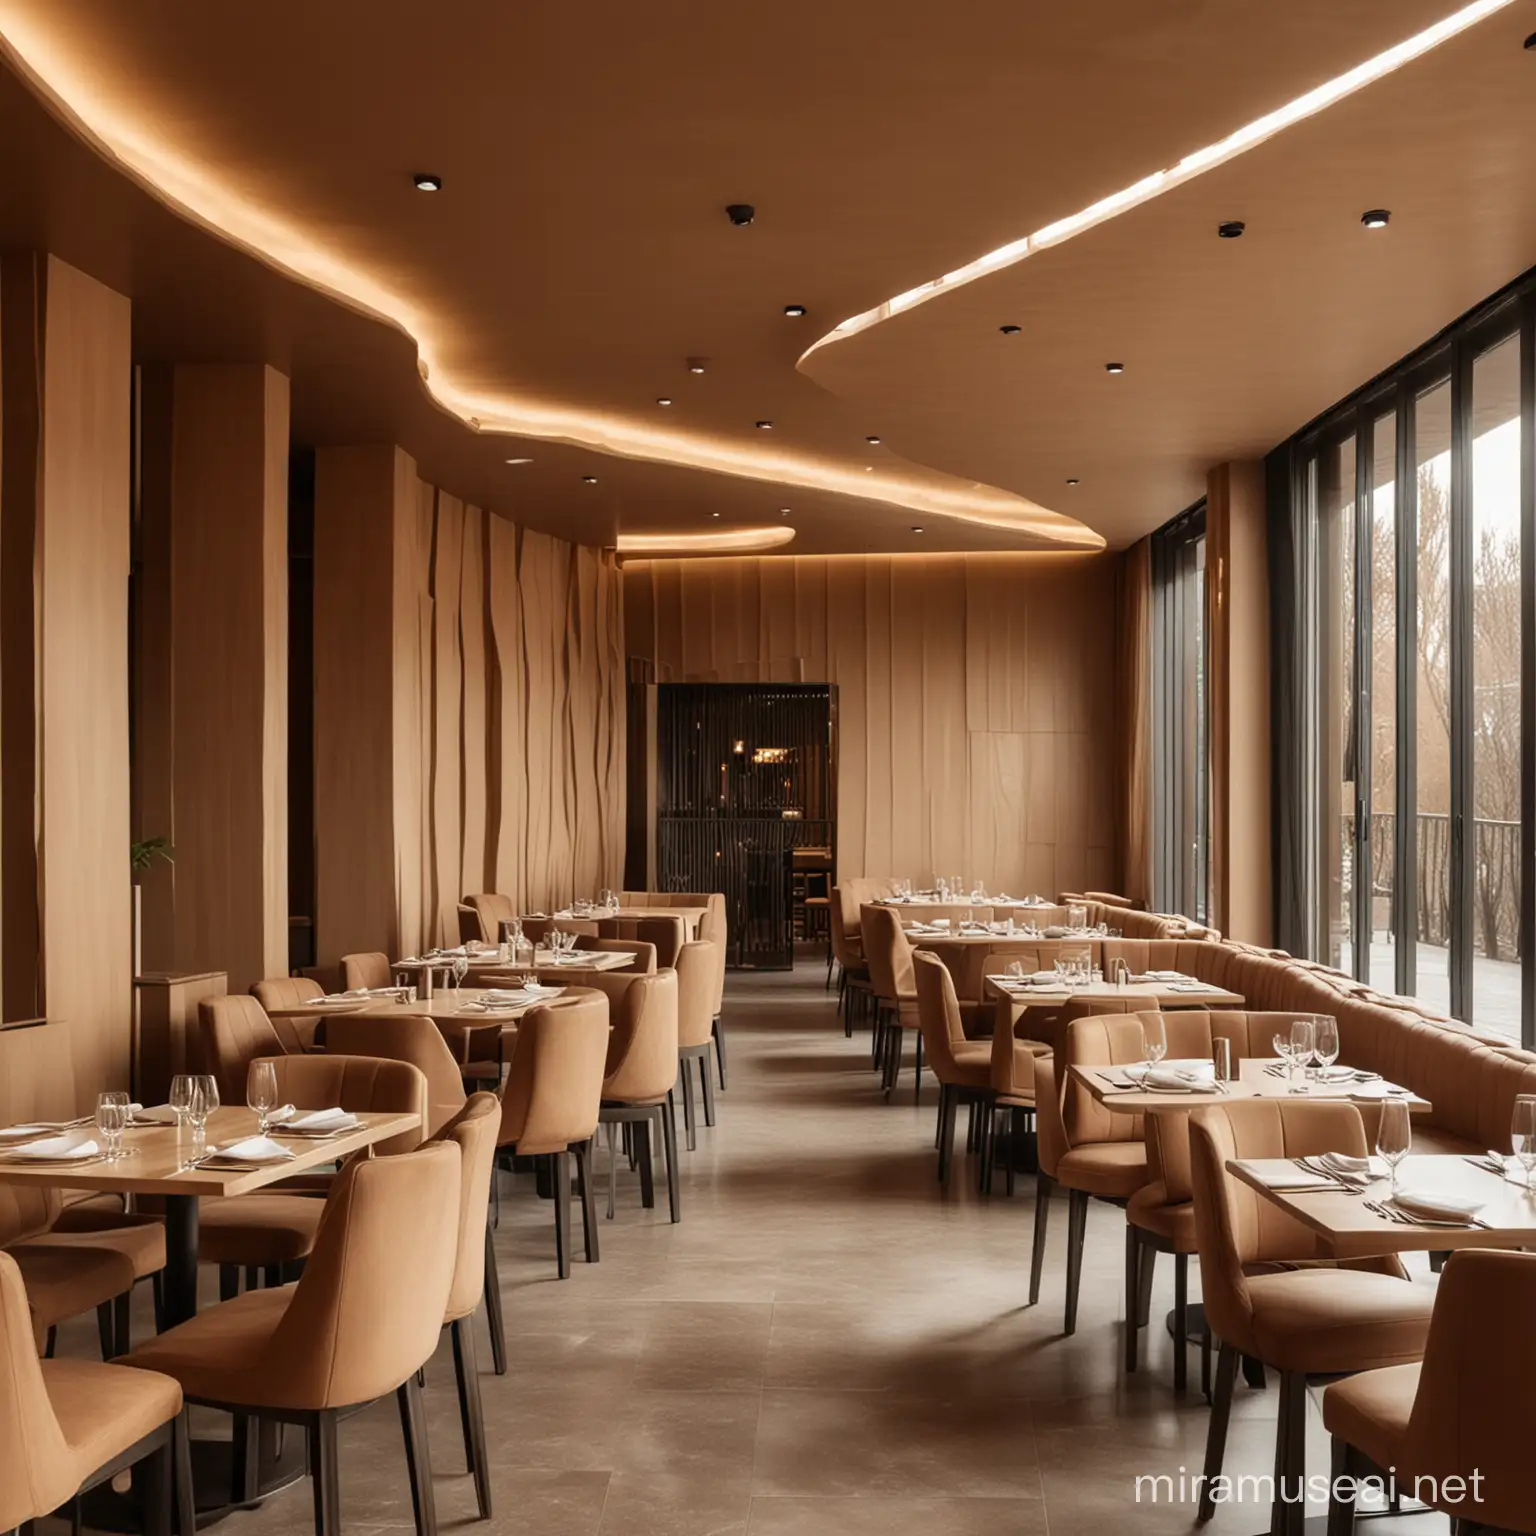 Contemporary Modern Restaurant Interior in Brown and Beige Tones